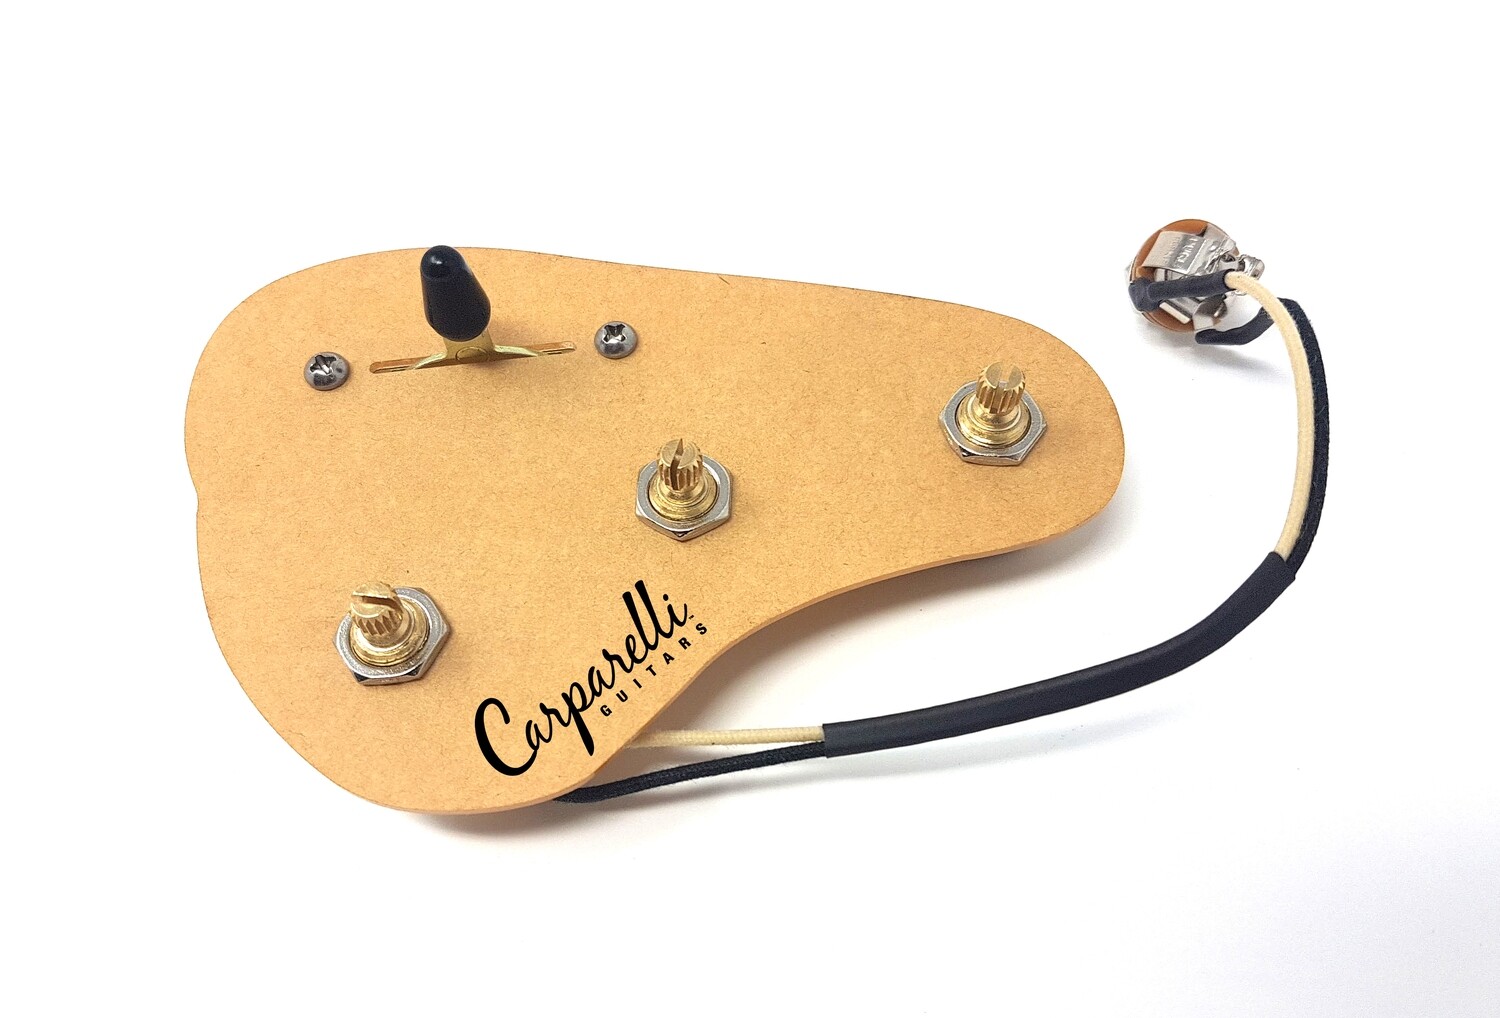 Carparelli Pre-Wired Strat Standard Guitar Wiring Harness + 2 Vitamin Q Paper in Oil Caps.